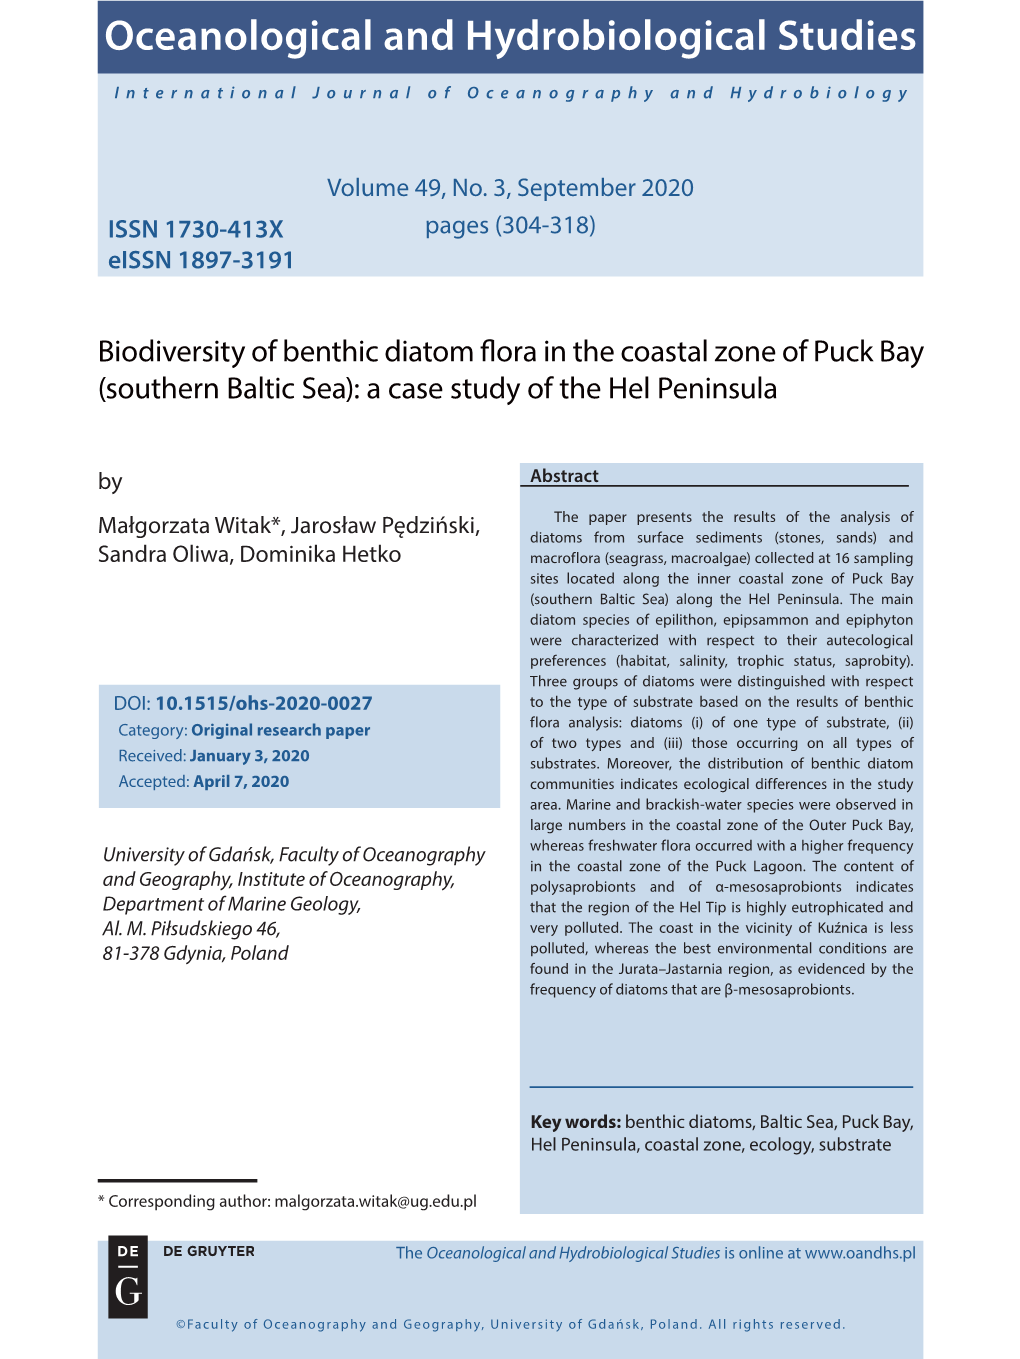 Biodiversity of Benthic Diatom Flora in the Coastal Zone of Puck Bay